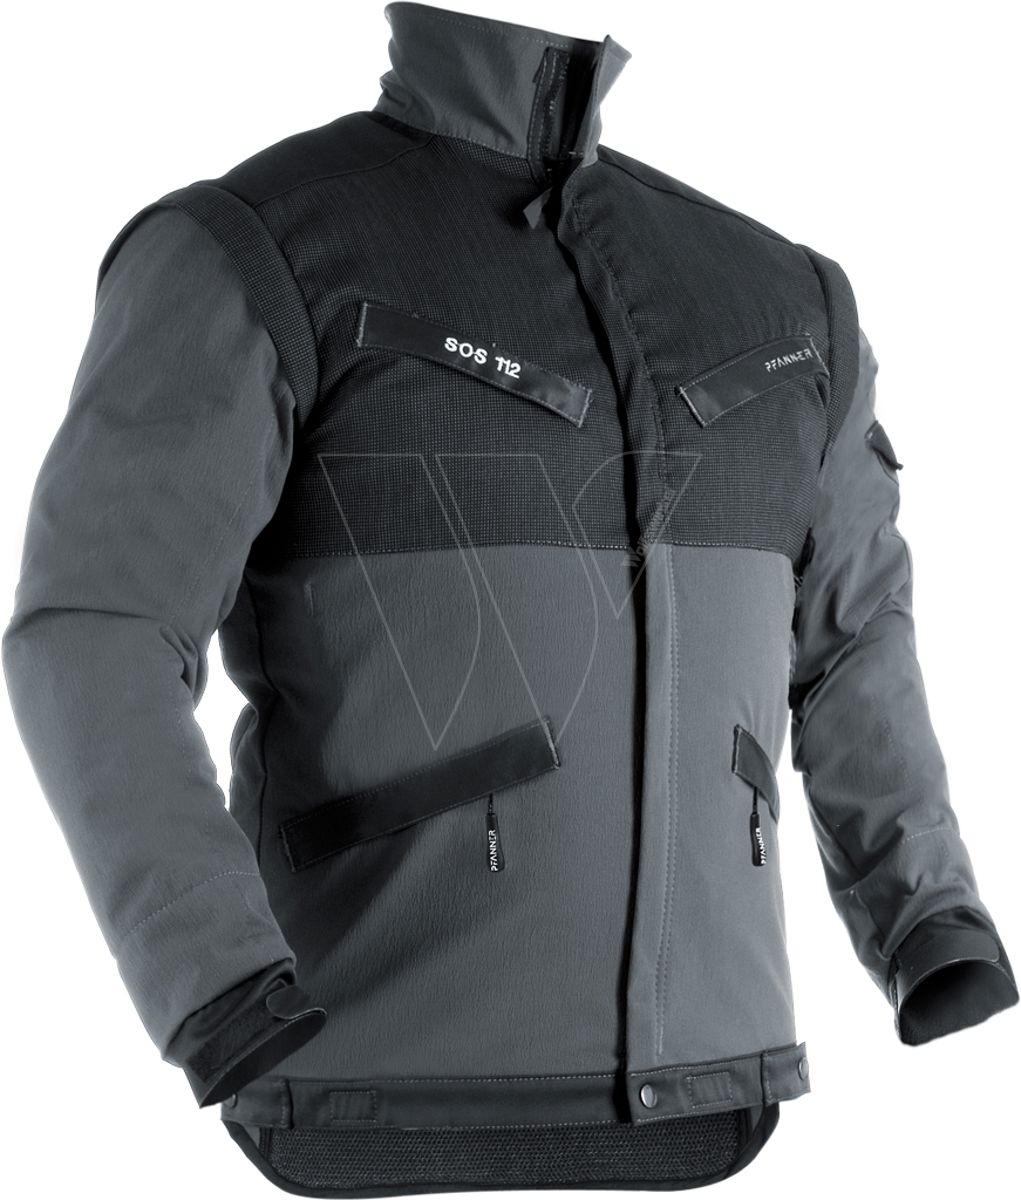 Pfanner klimaair® reflex jacket grau m